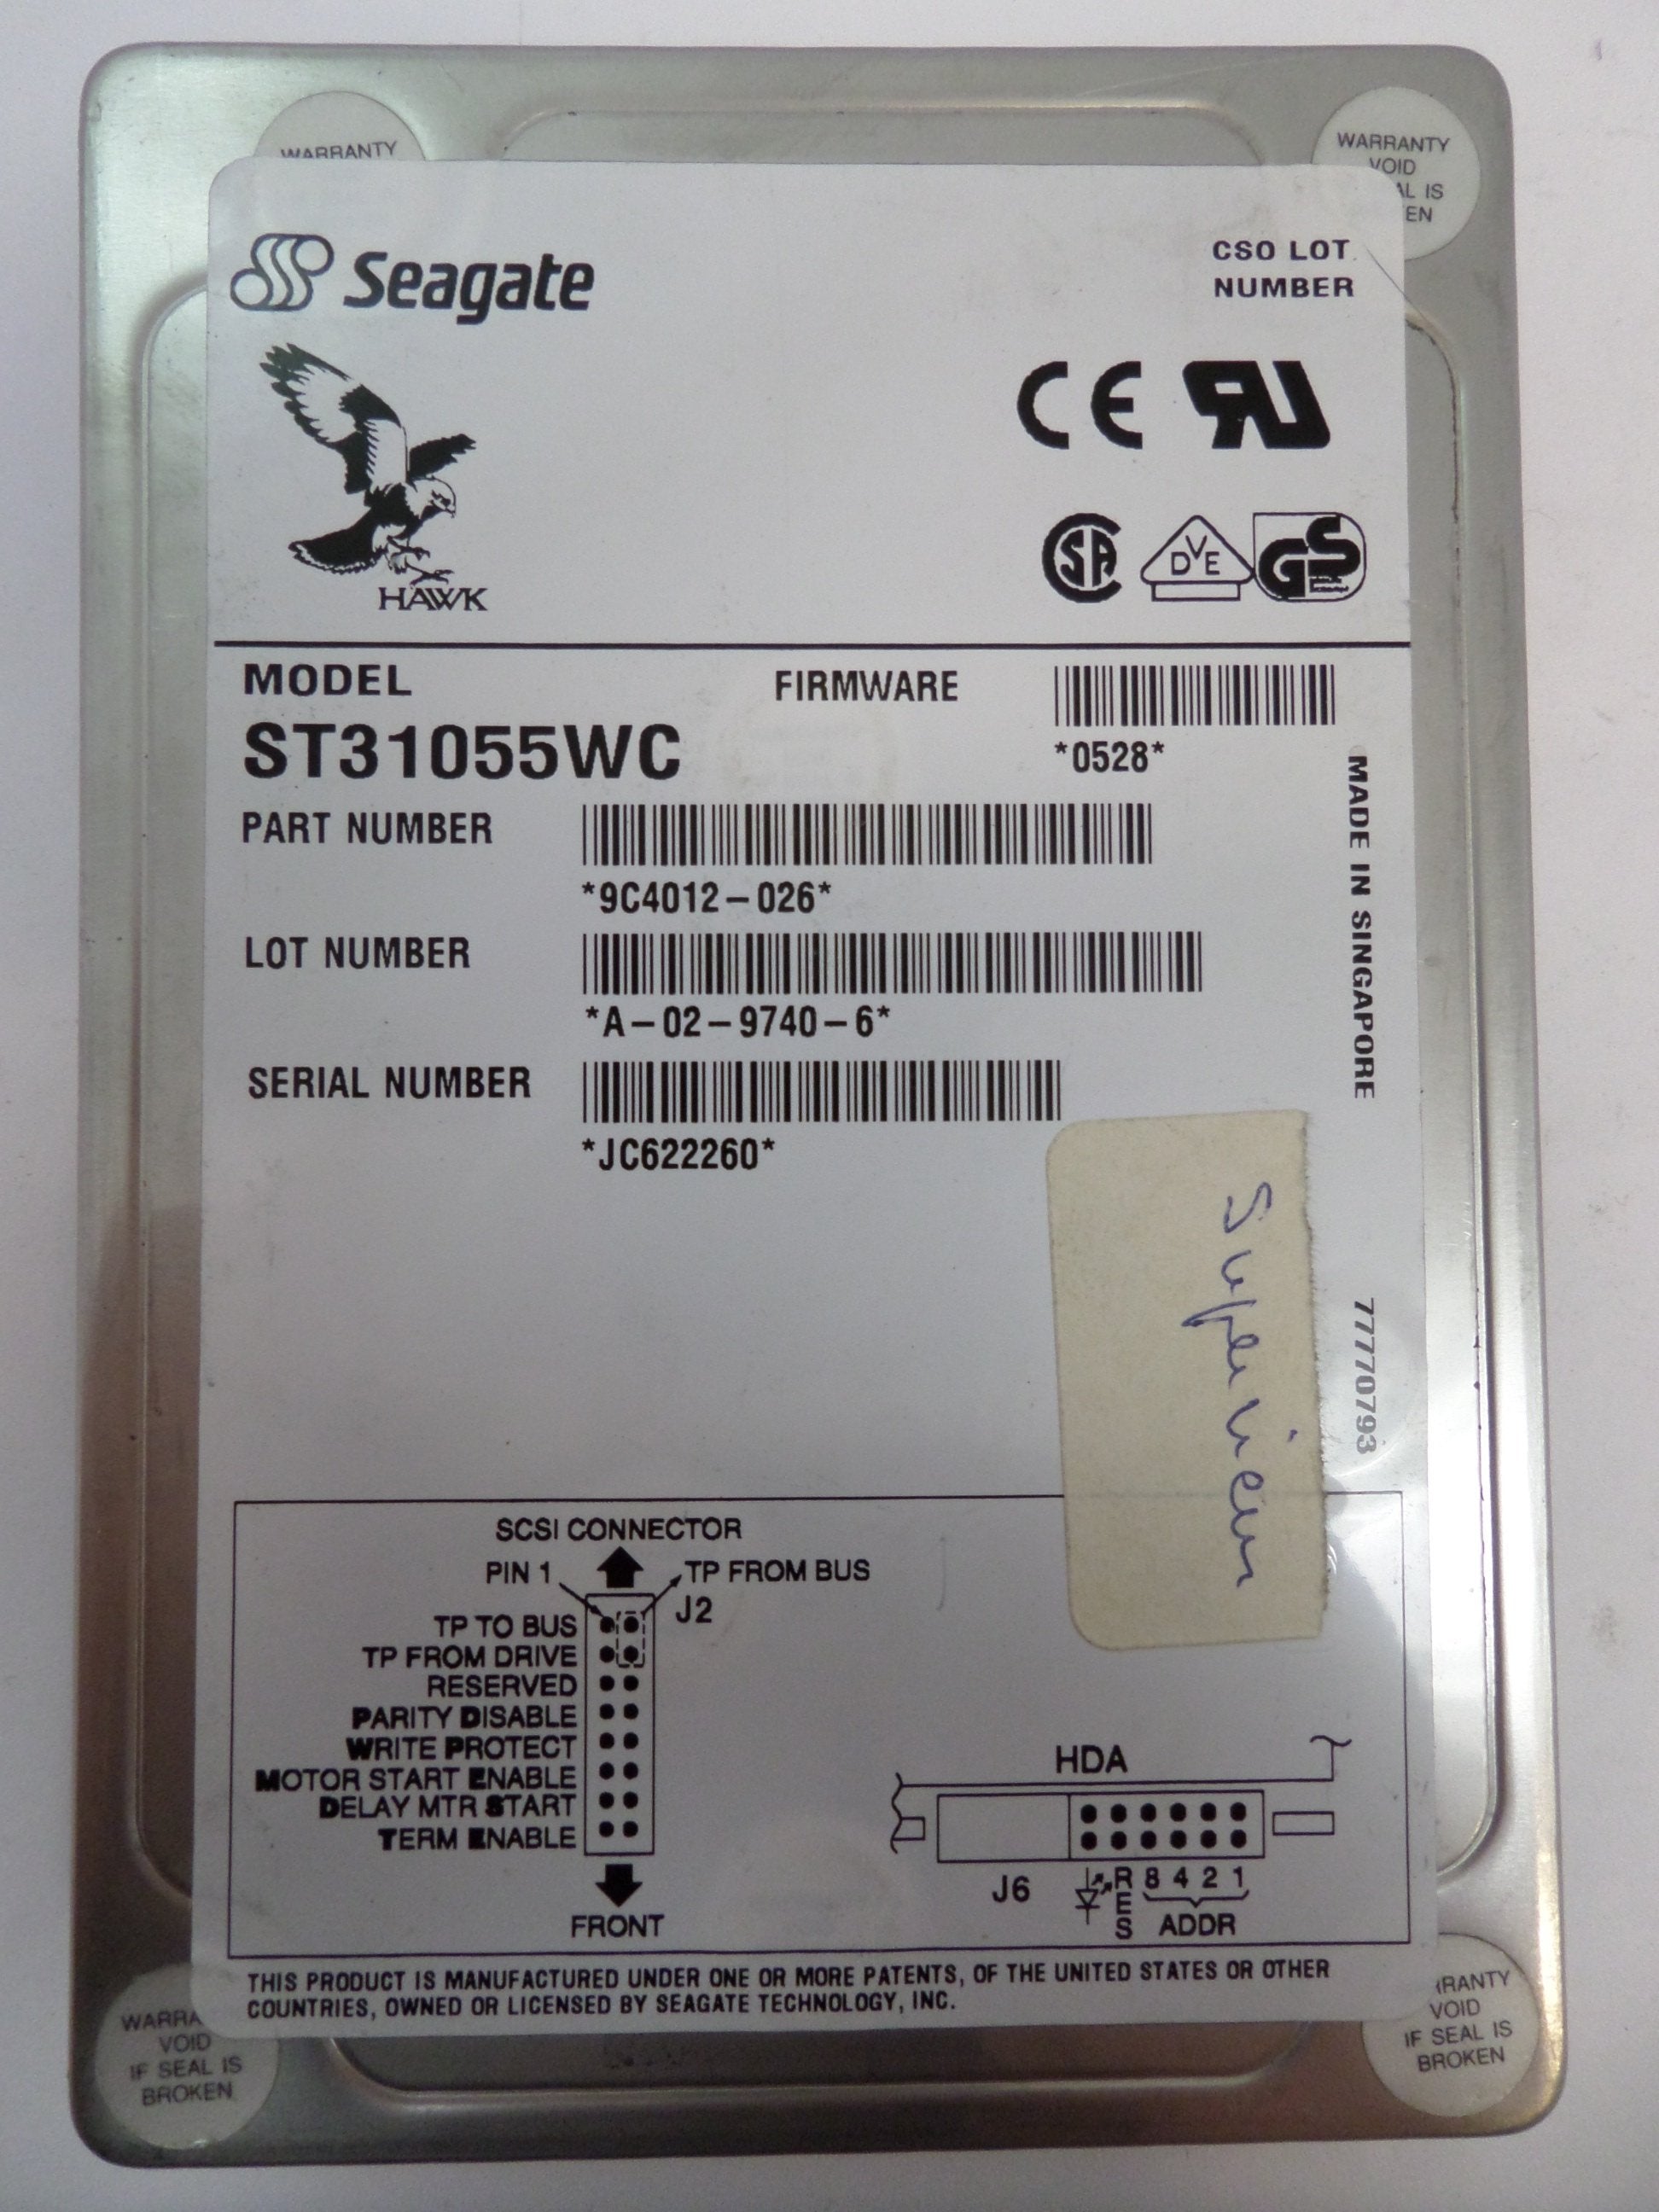 PR26073_9C4012-026_Seagate 1GB SCSI 80pin 5400rpm 3.5in HDD - Image3